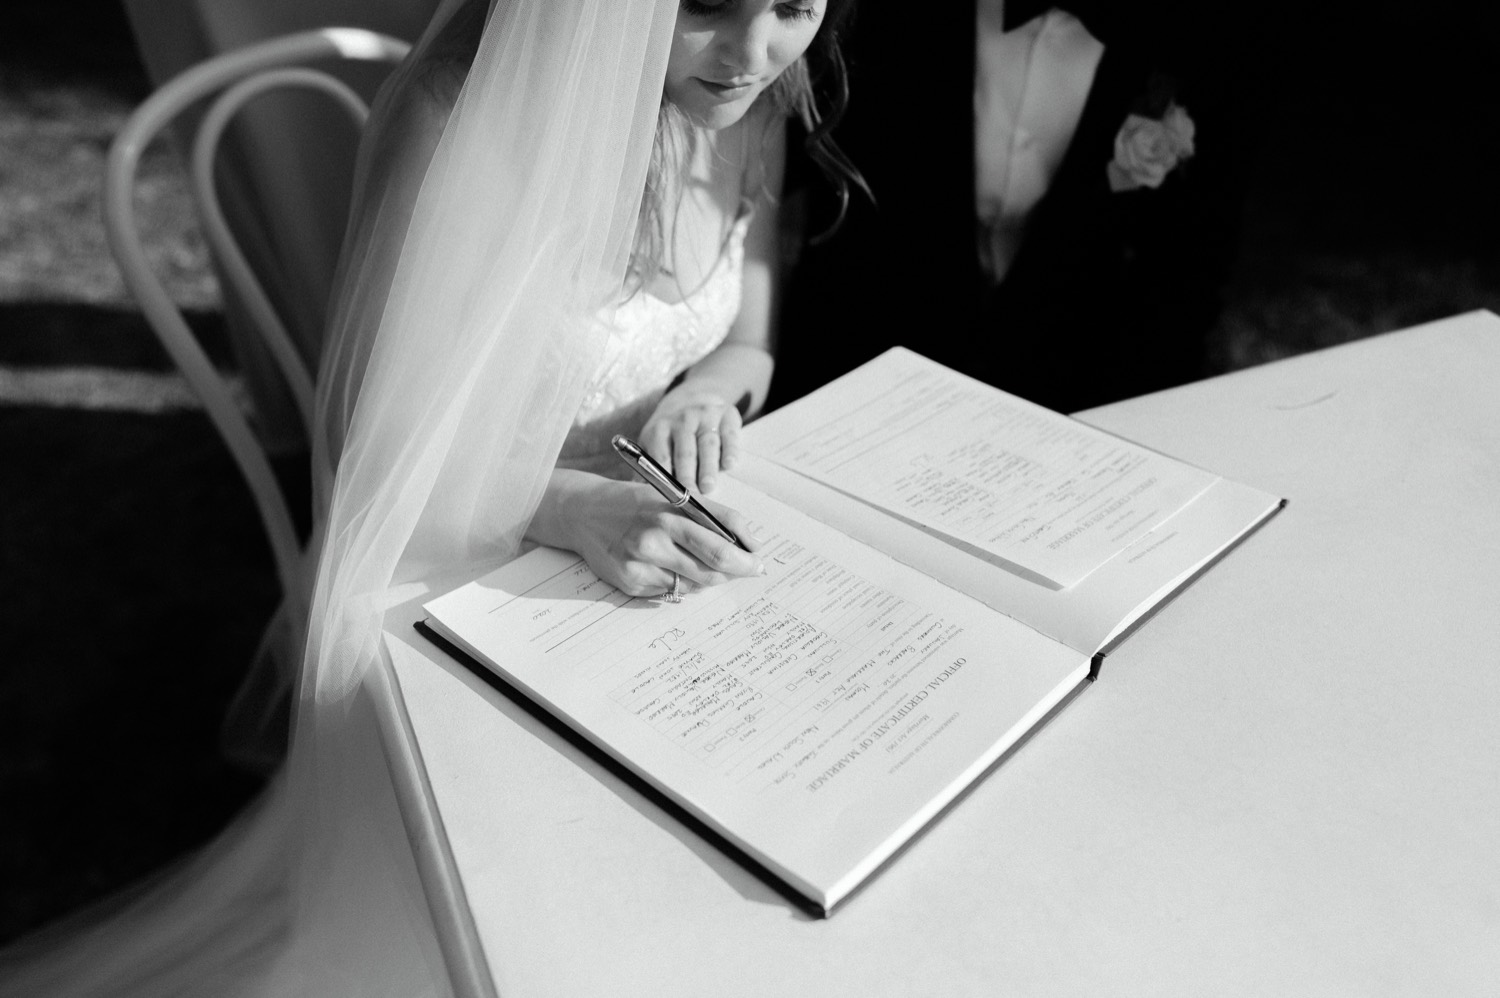 arty shot of bride signing wedding certificate